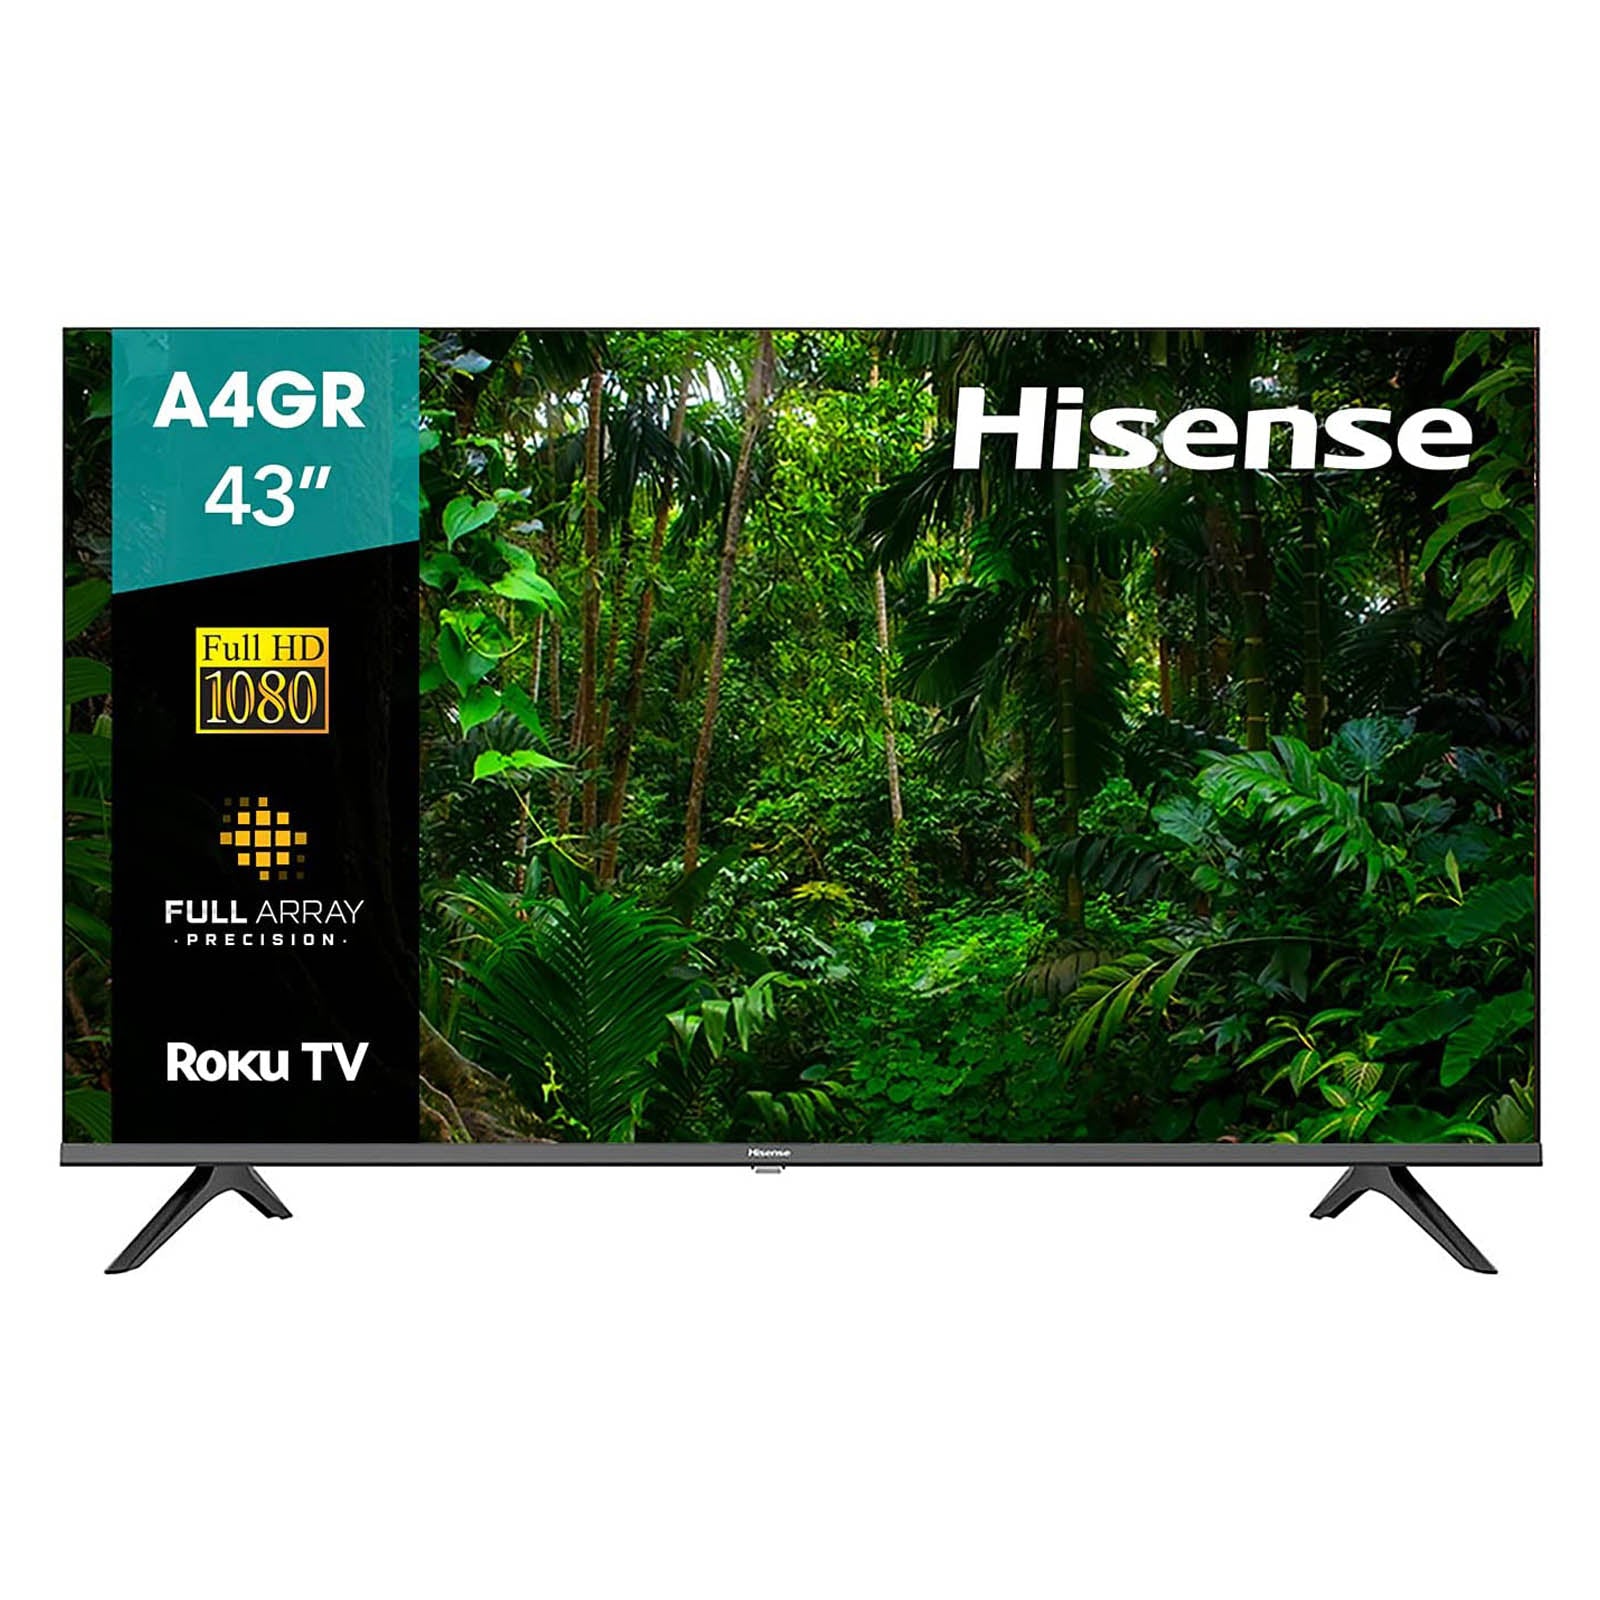 Pantalla 43 Pulgadas Hisense LED Roku TV Full HD 43A4GR – MegaAudio